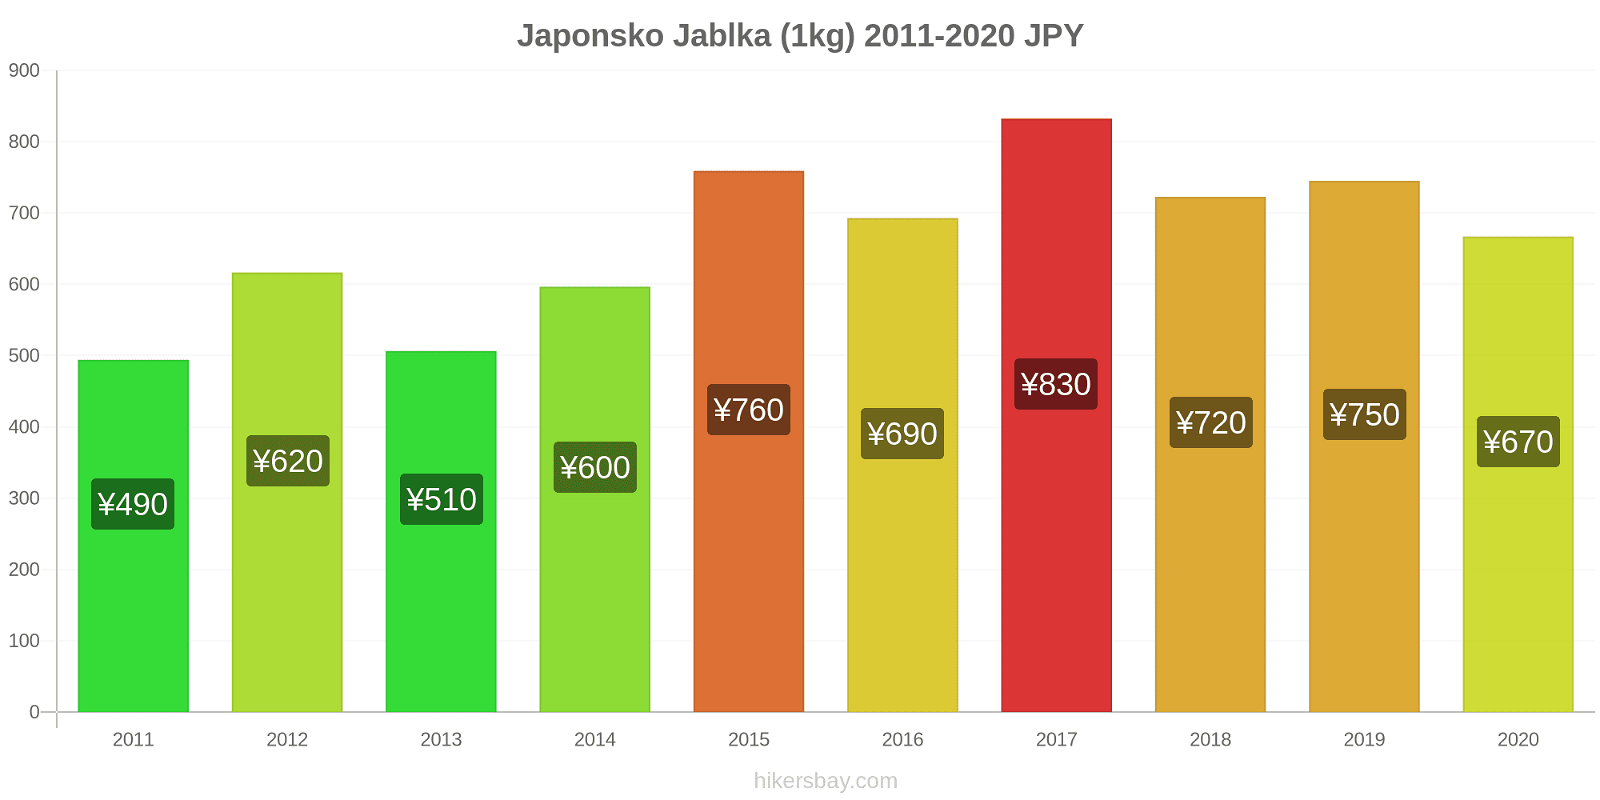 Japonsko změny cen Jablka (1kg) hikersbay.com